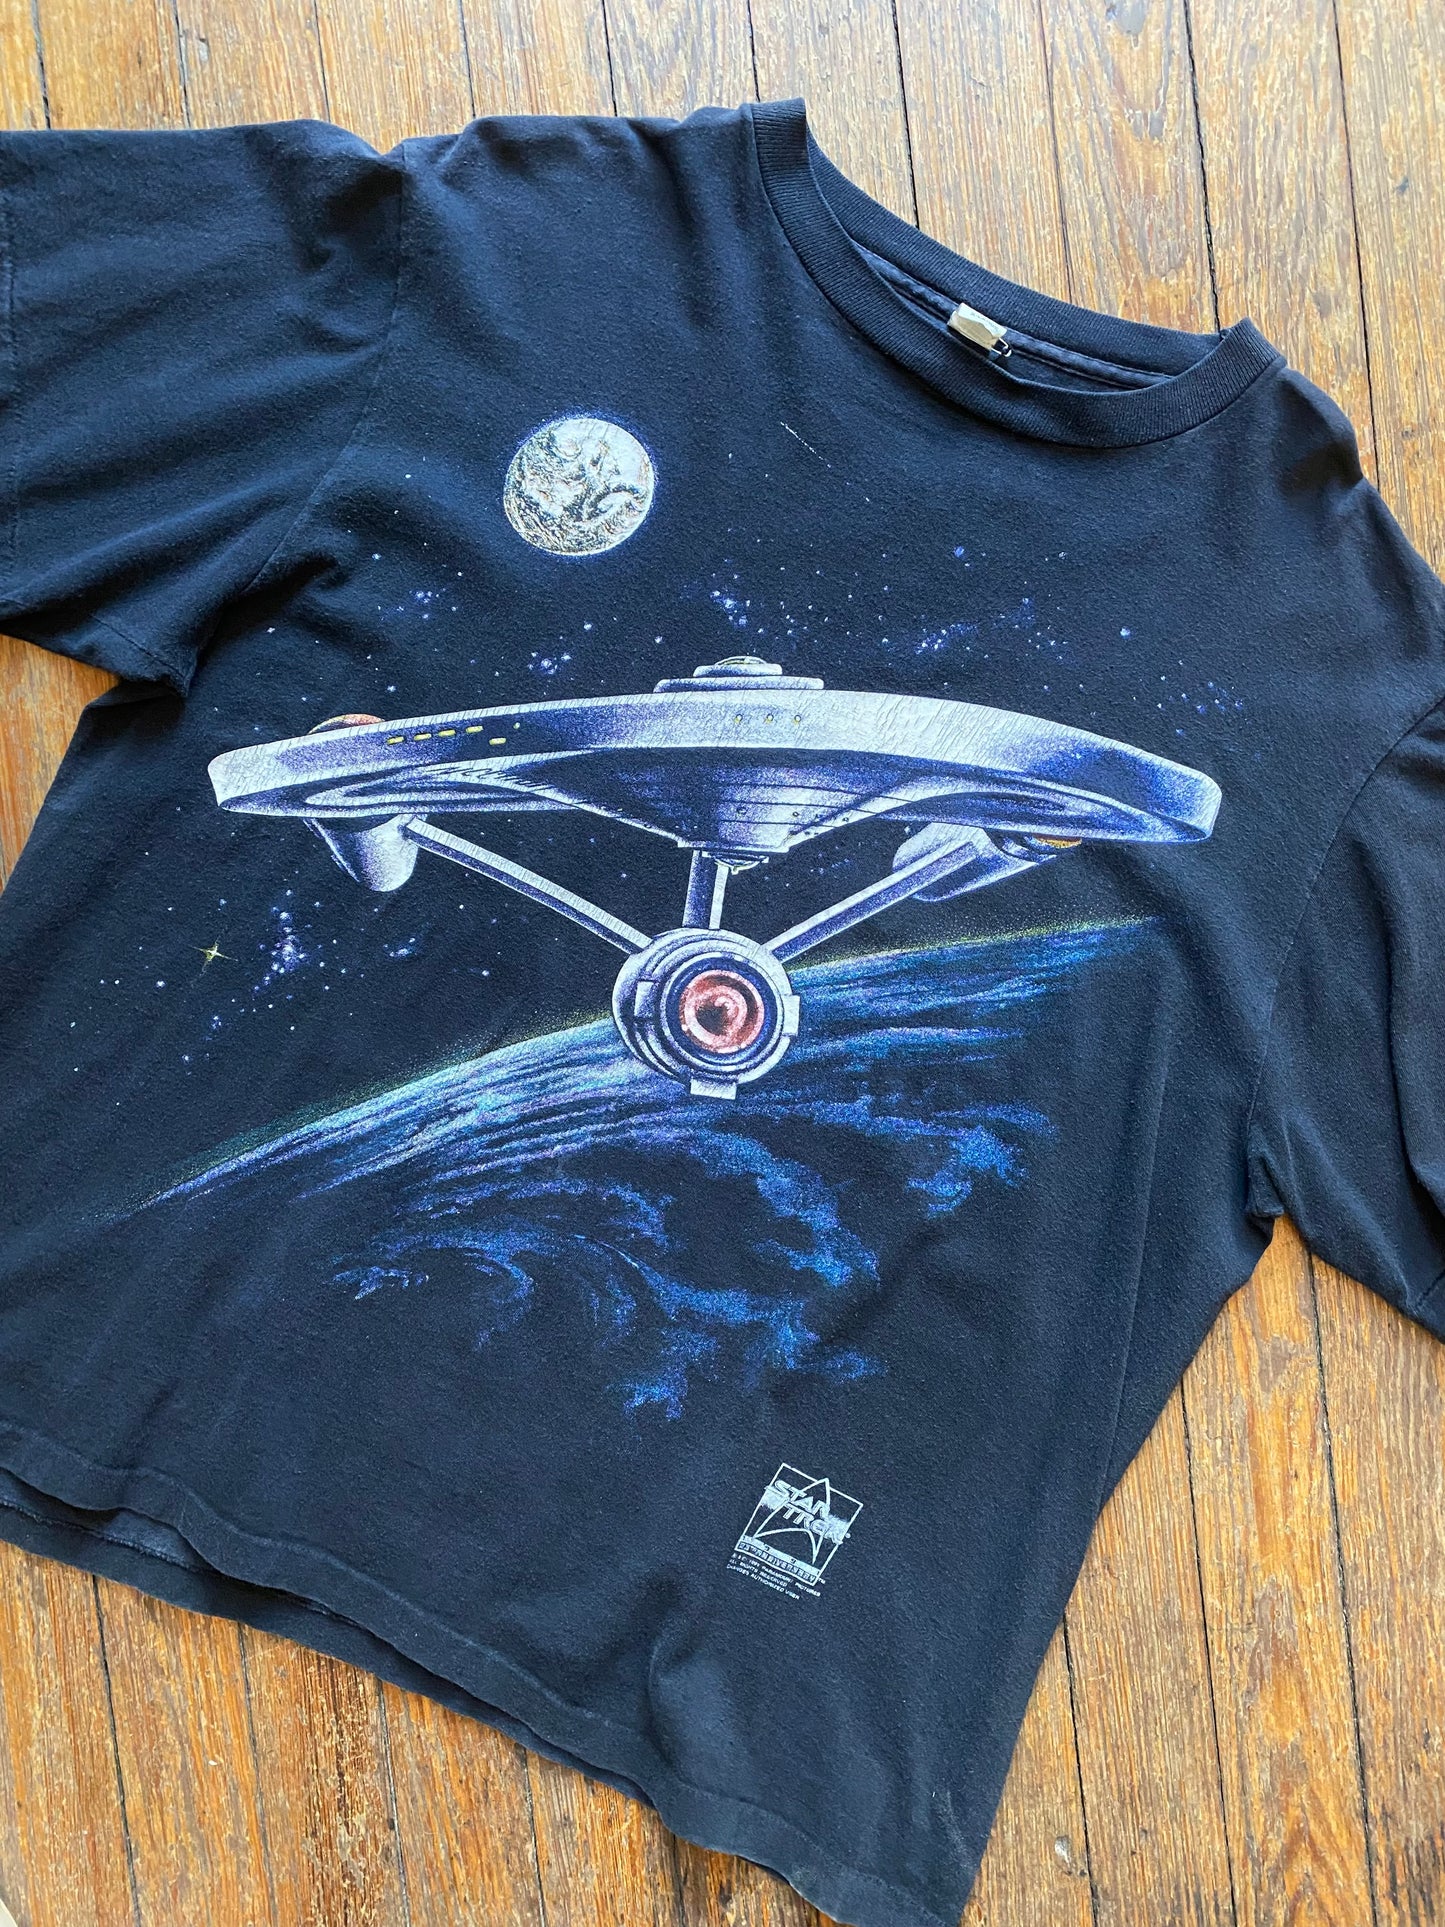 Vintage 1991 Licensed Star Trek 23rd Anniversary USS Enterprise T-Shirt